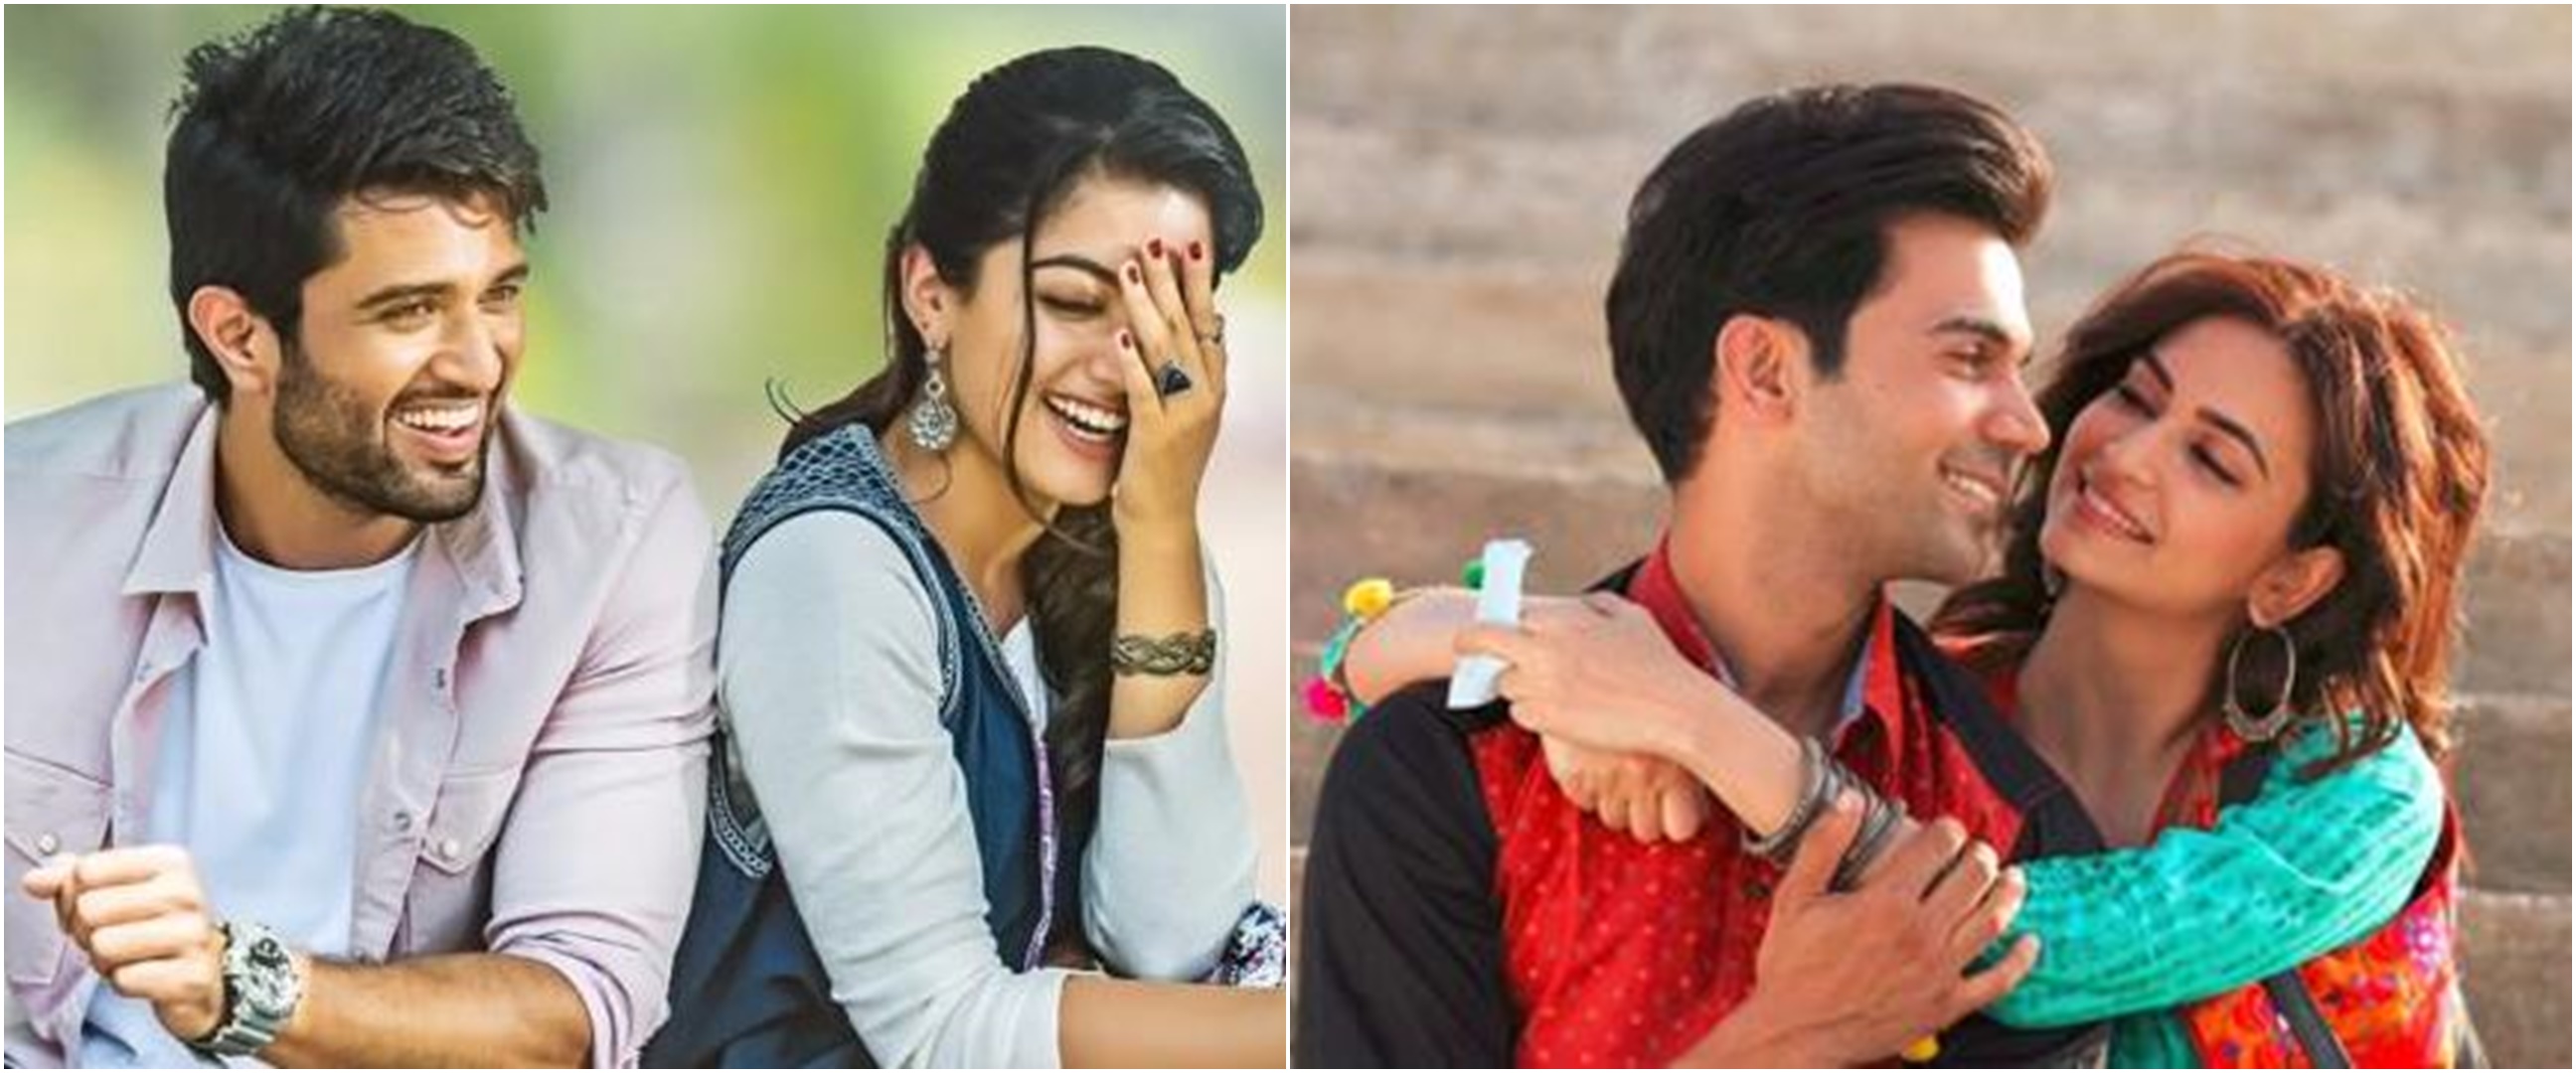 10 Film India romantis terlaris, layak ditonton ulang